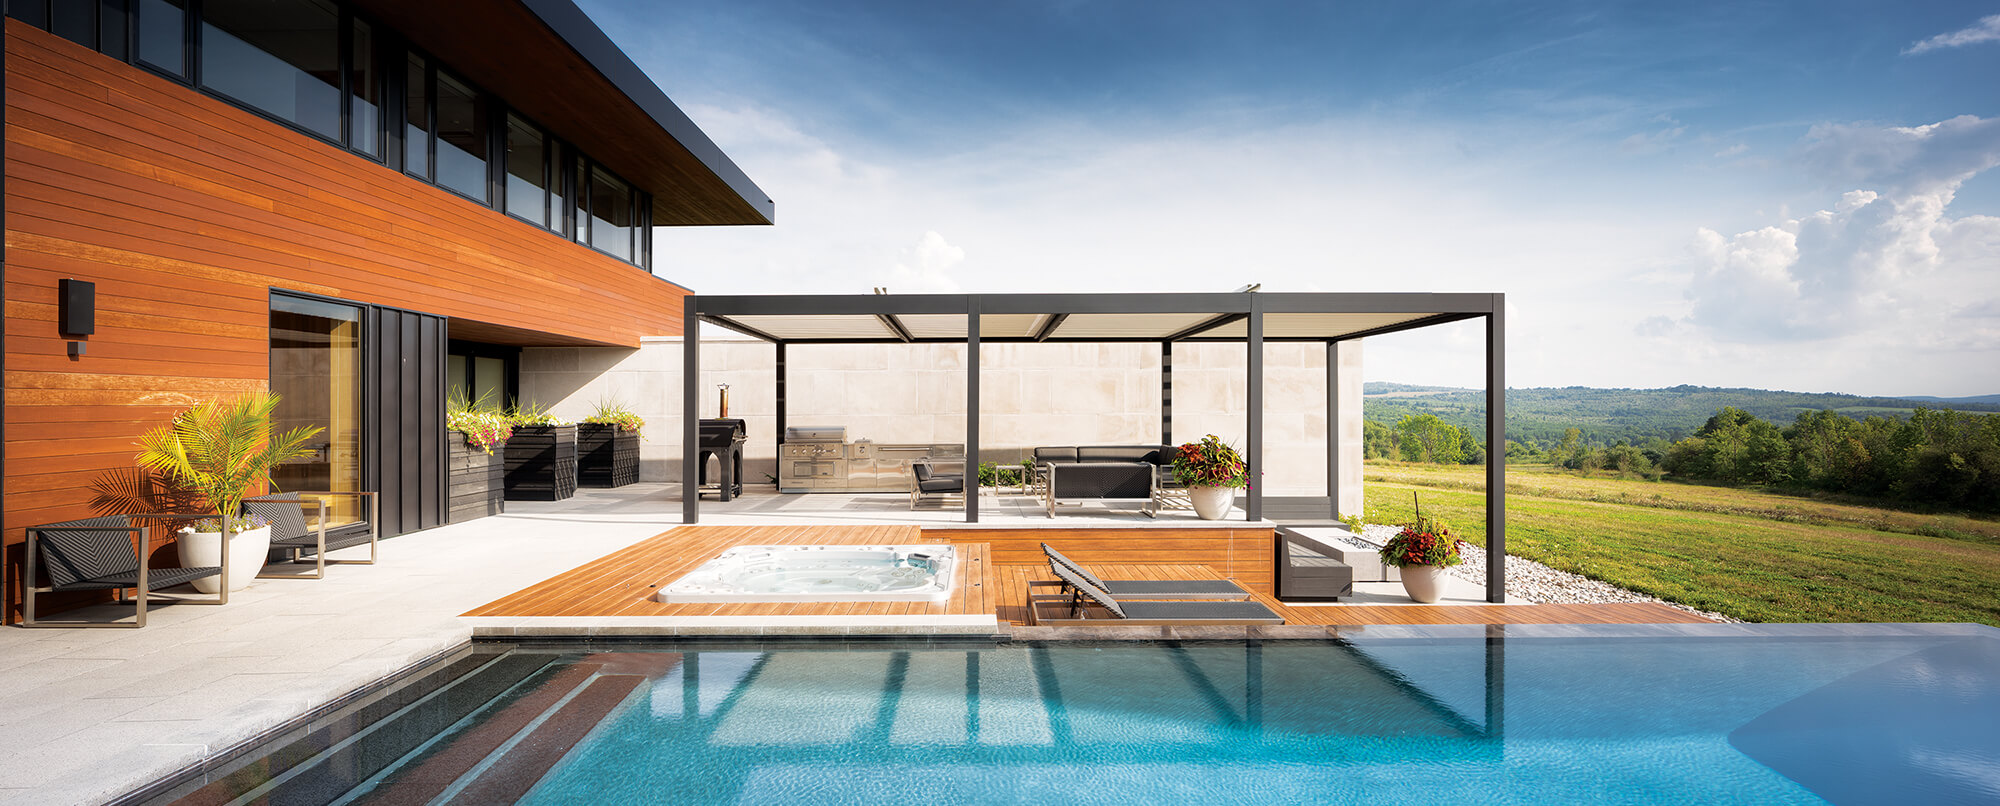 outdoor modern pool and gazebo